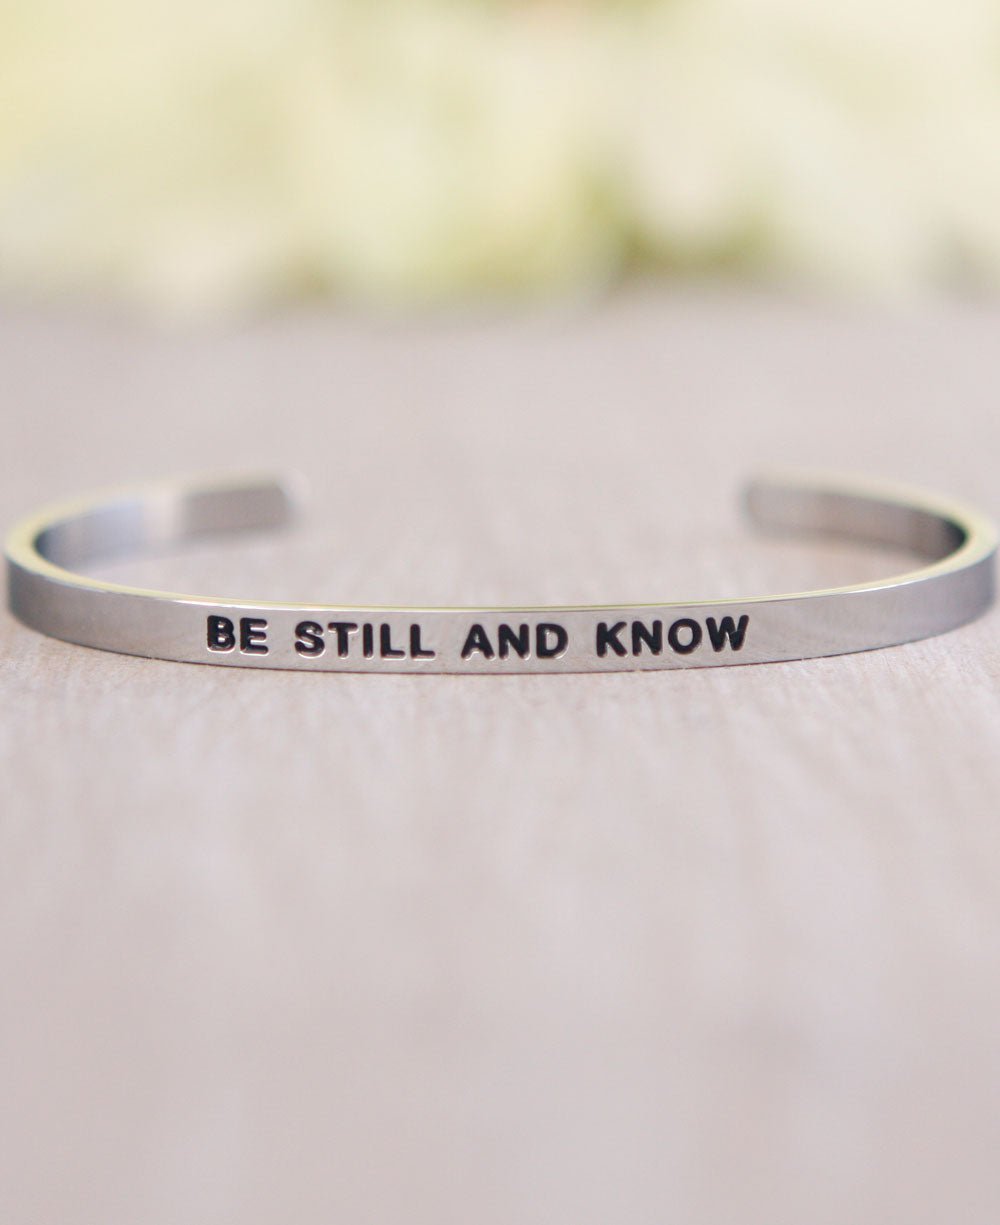 Engraved Metal Cuff Bracelet, Be Still and Know - Bracelets